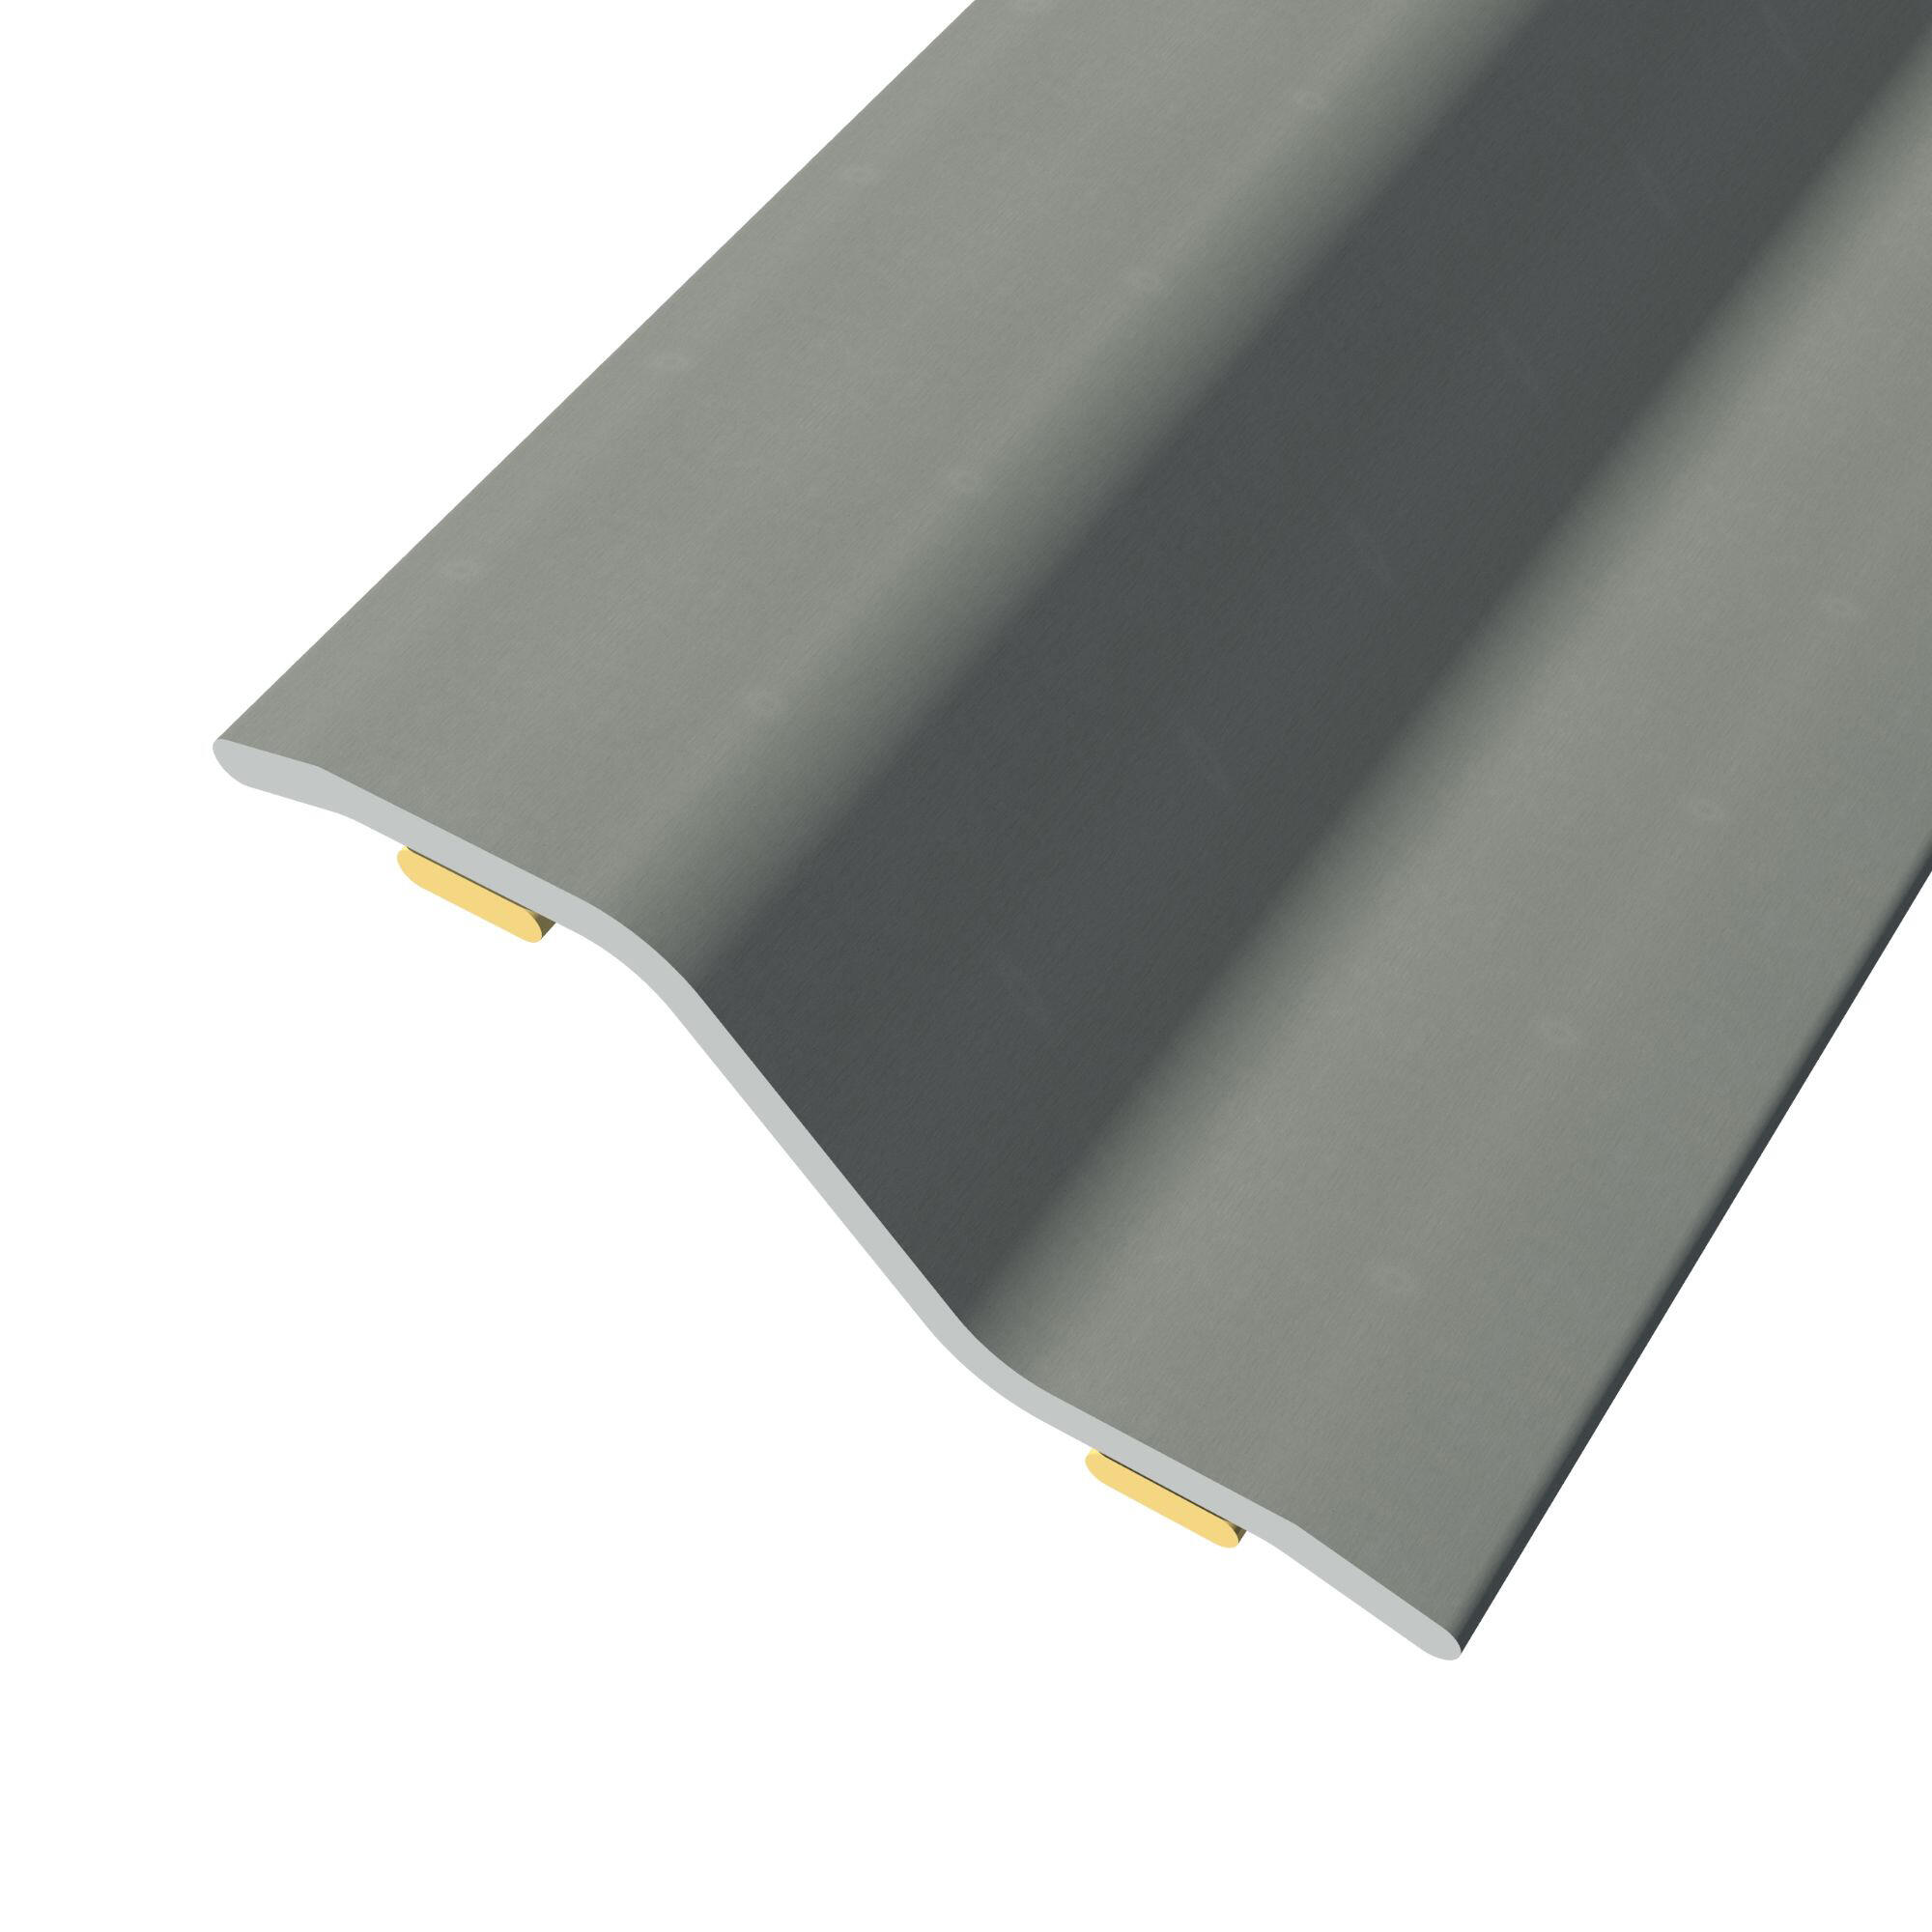 Diferencia de nivel de aluminio gris / plata 183 cm